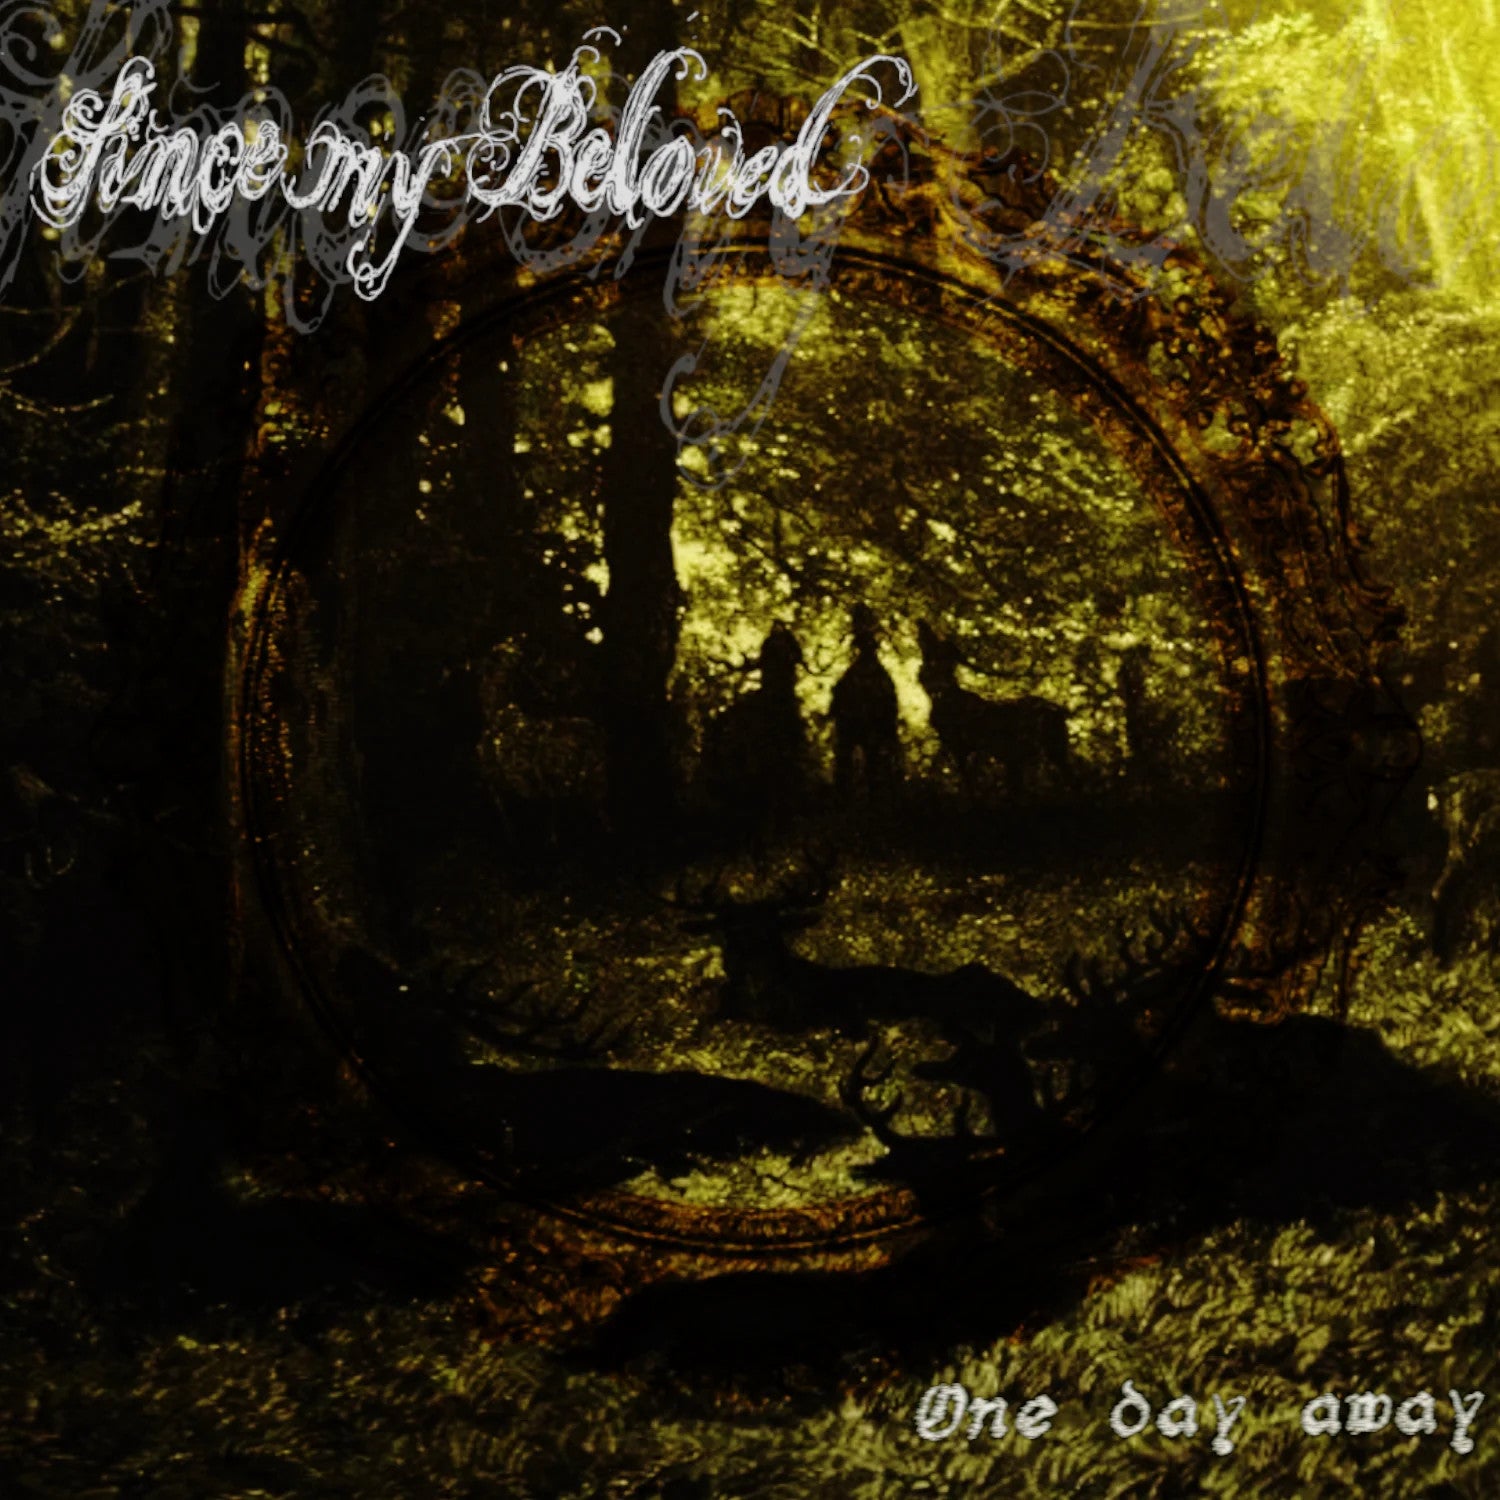 Since My Beloved- One Day Away (Daze Records) - Darkside Records